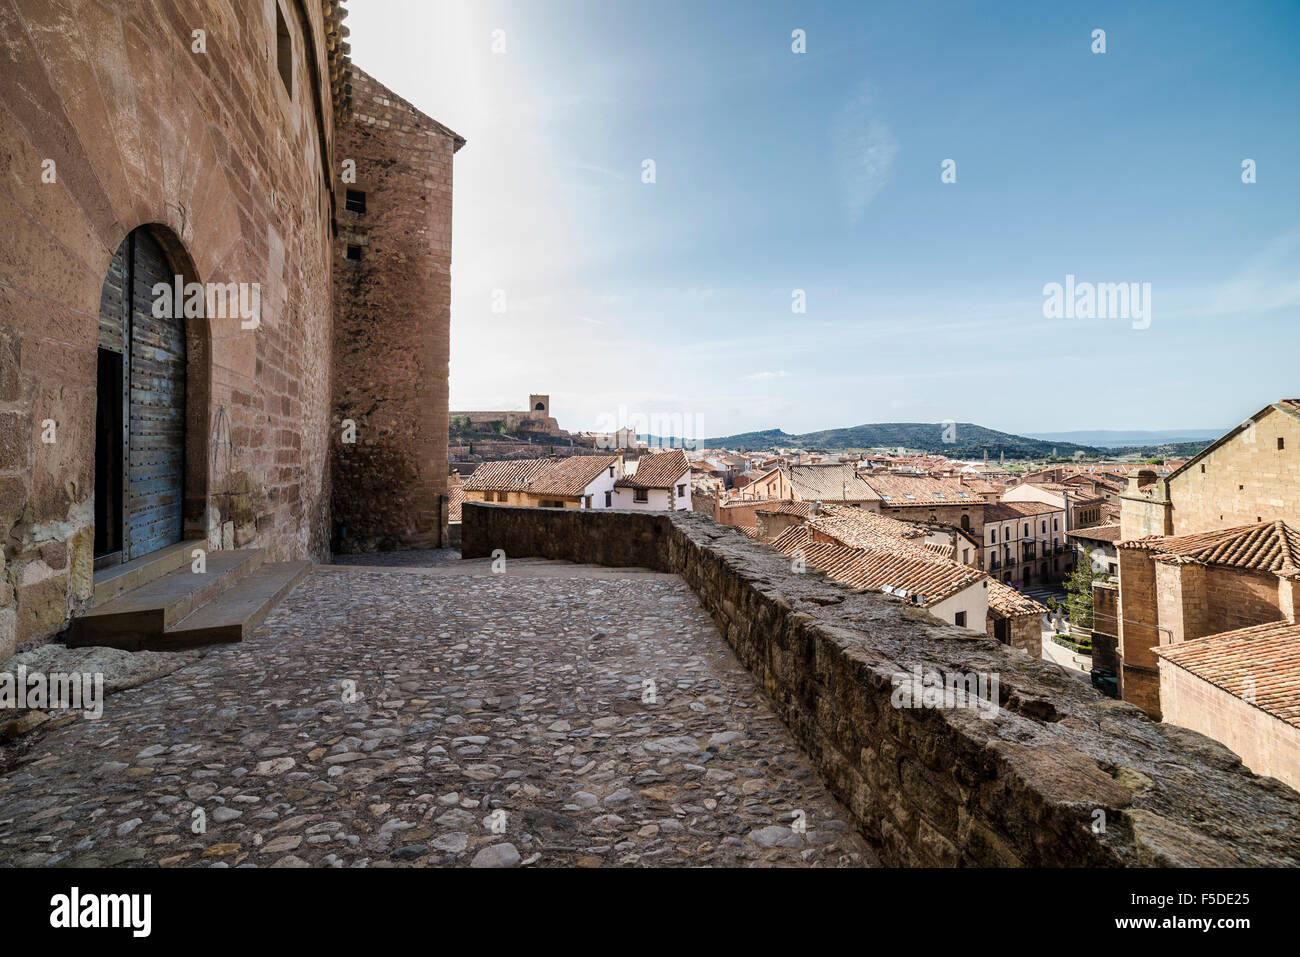 Juan Fernandez de Heredia fortified palace by day. Mora de Rubielos, Comarca of Gudar-Javalambre, Teruel, Aragon, Spain Stock Photo